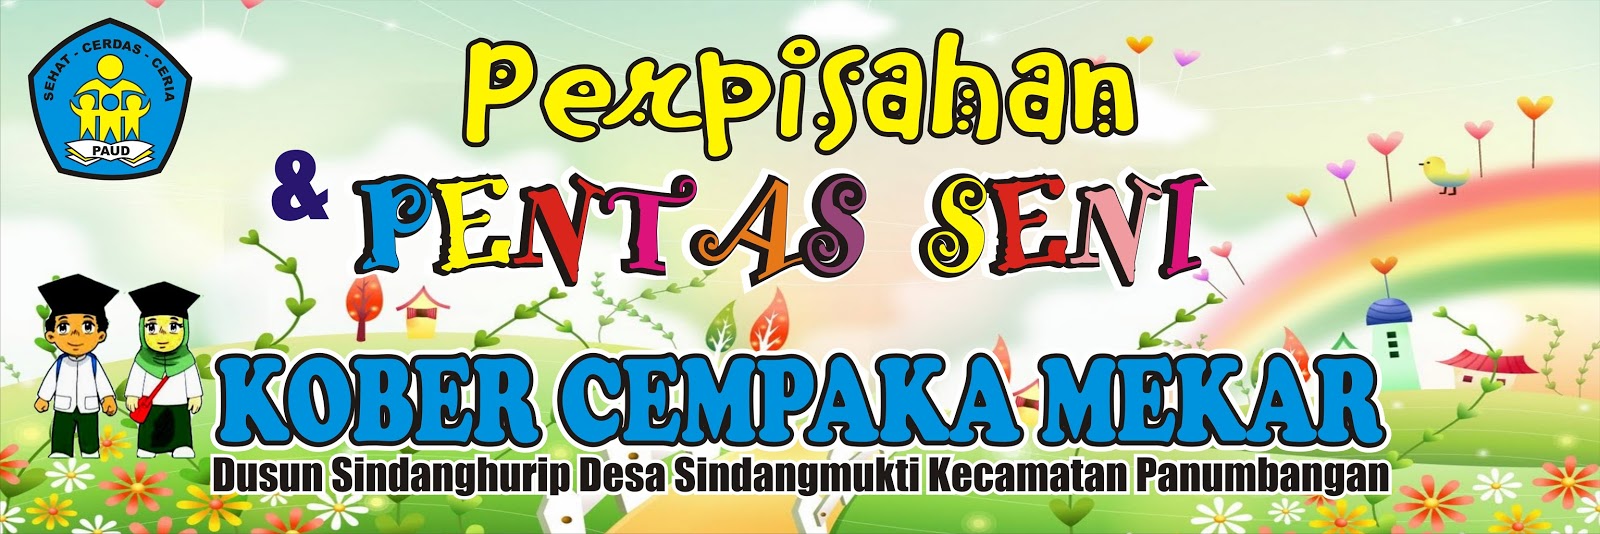 Contoh Banner Pentas Seni - The Best Banner 2017